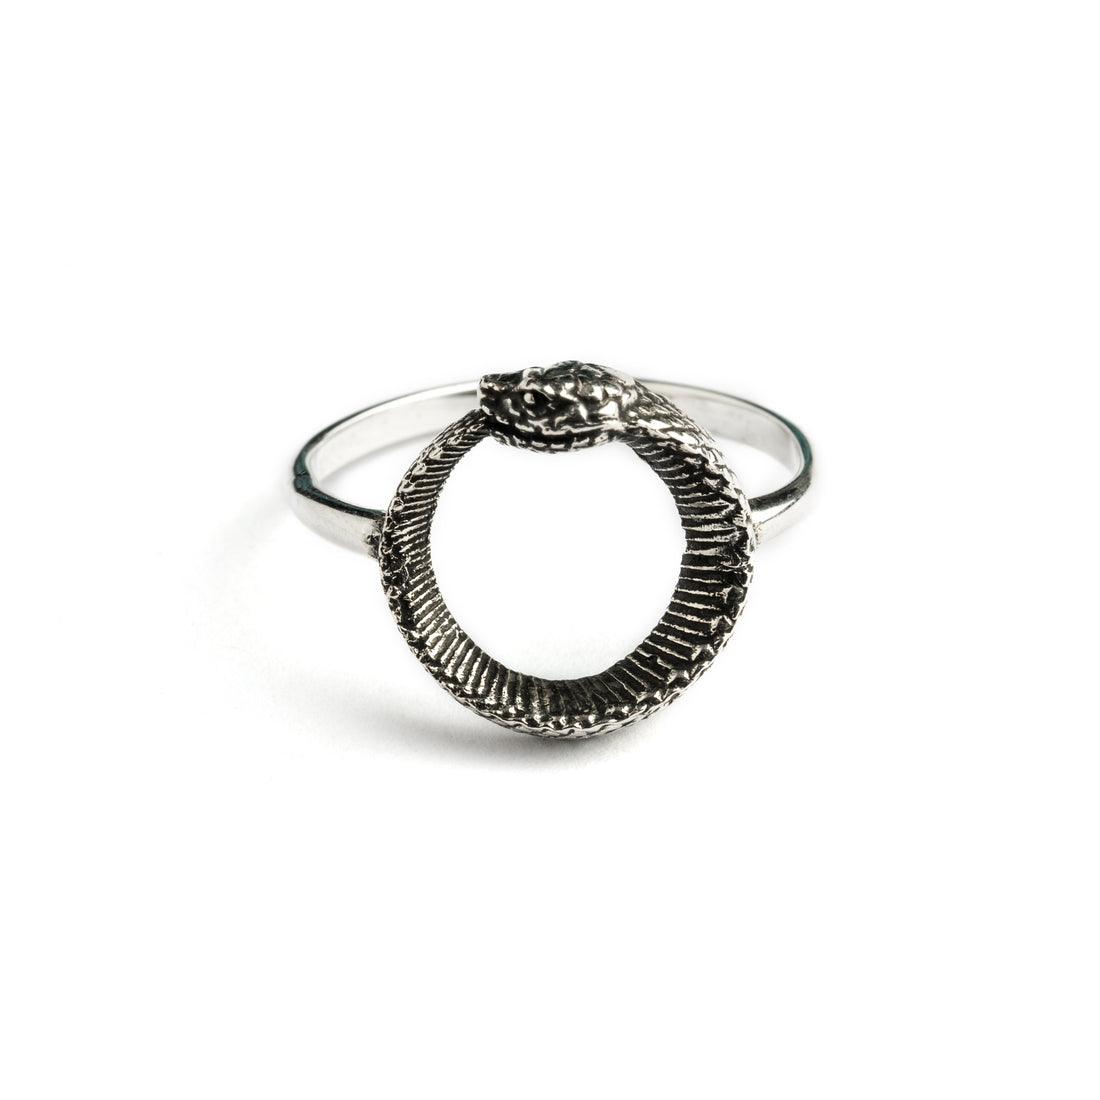 Silver Ouroboros Snake Ring frontal view